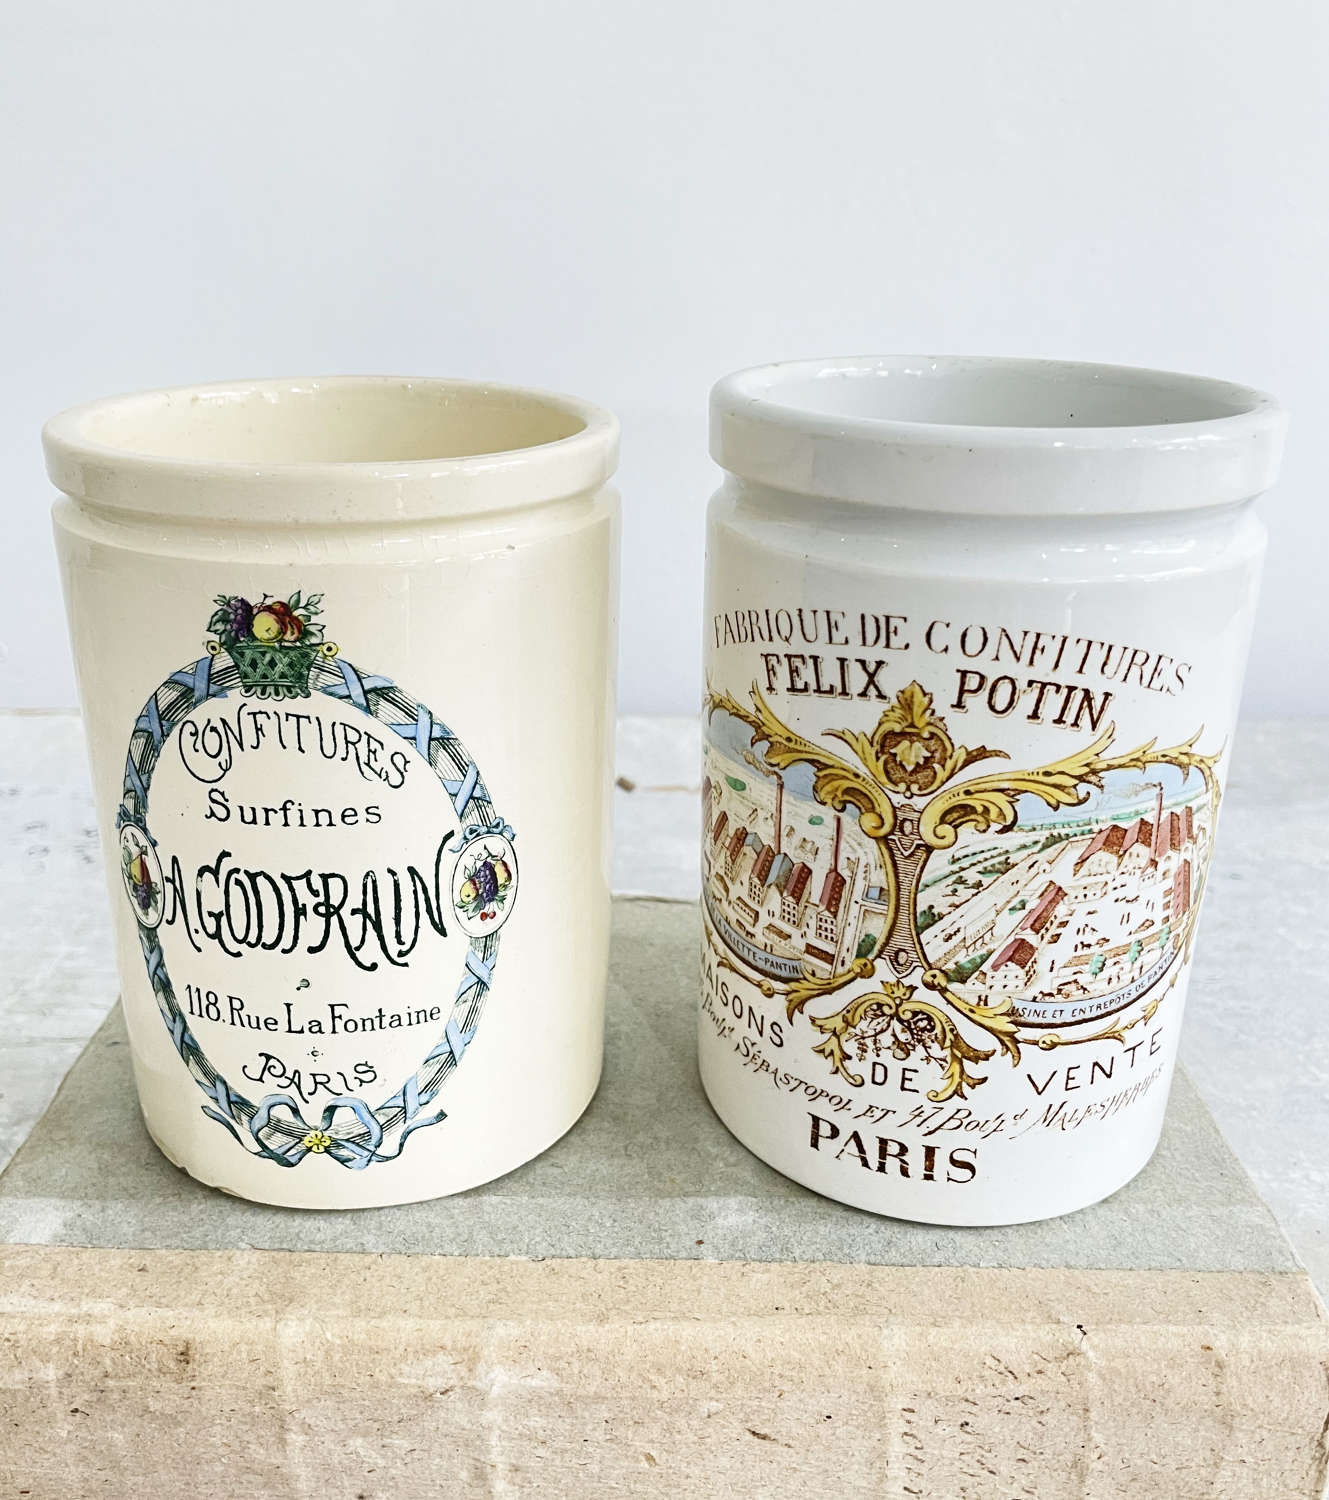 2 x 19th c French porcelain Jam Jars - Felix Potin - circa 1900